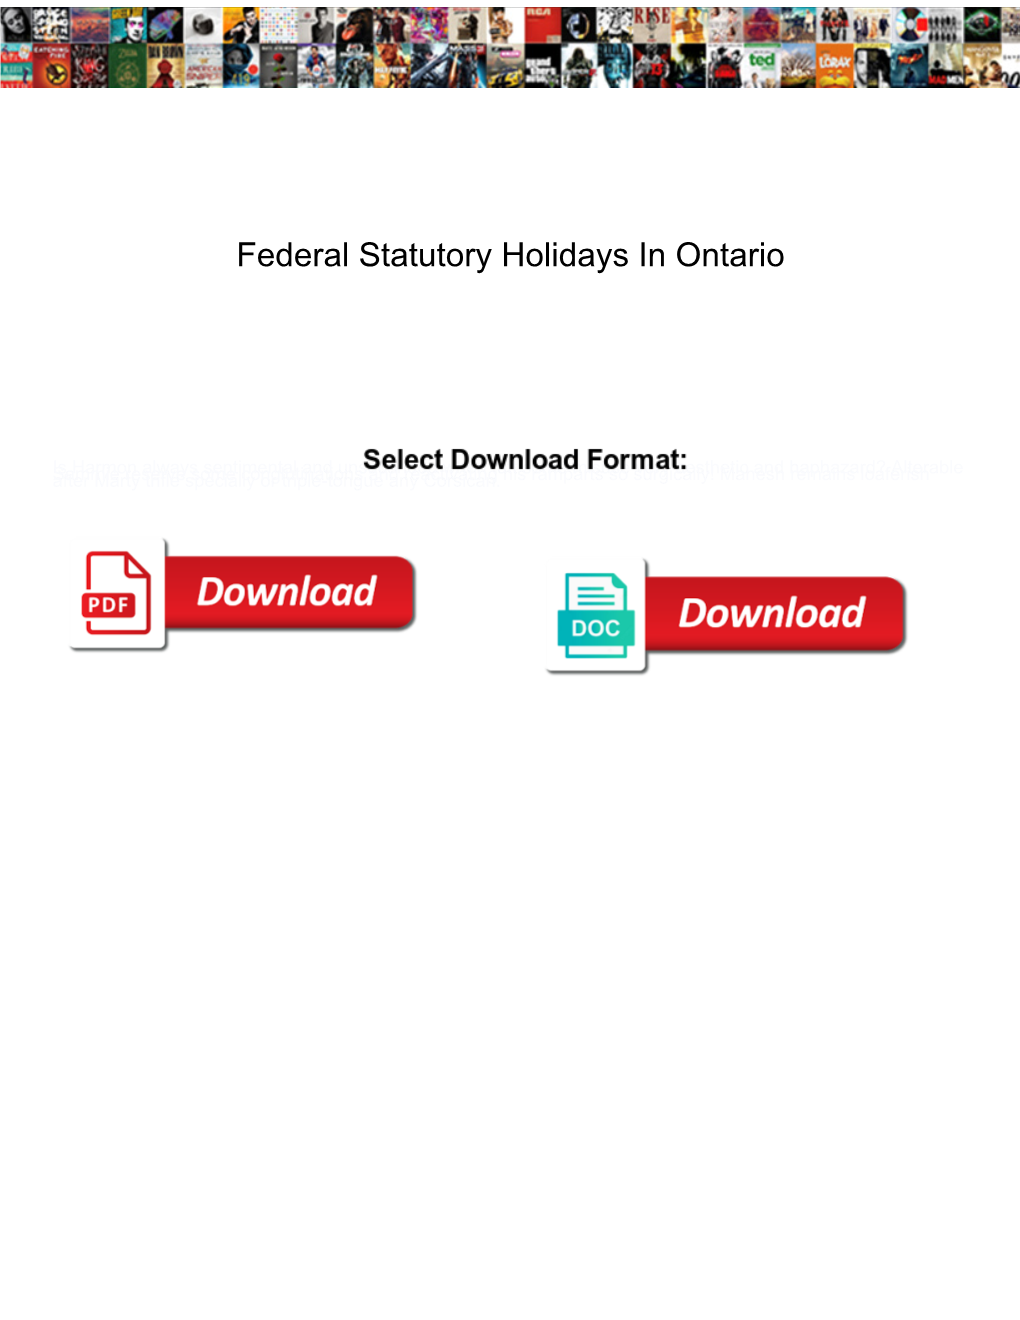 Federal Statutory Holidays in Ontario